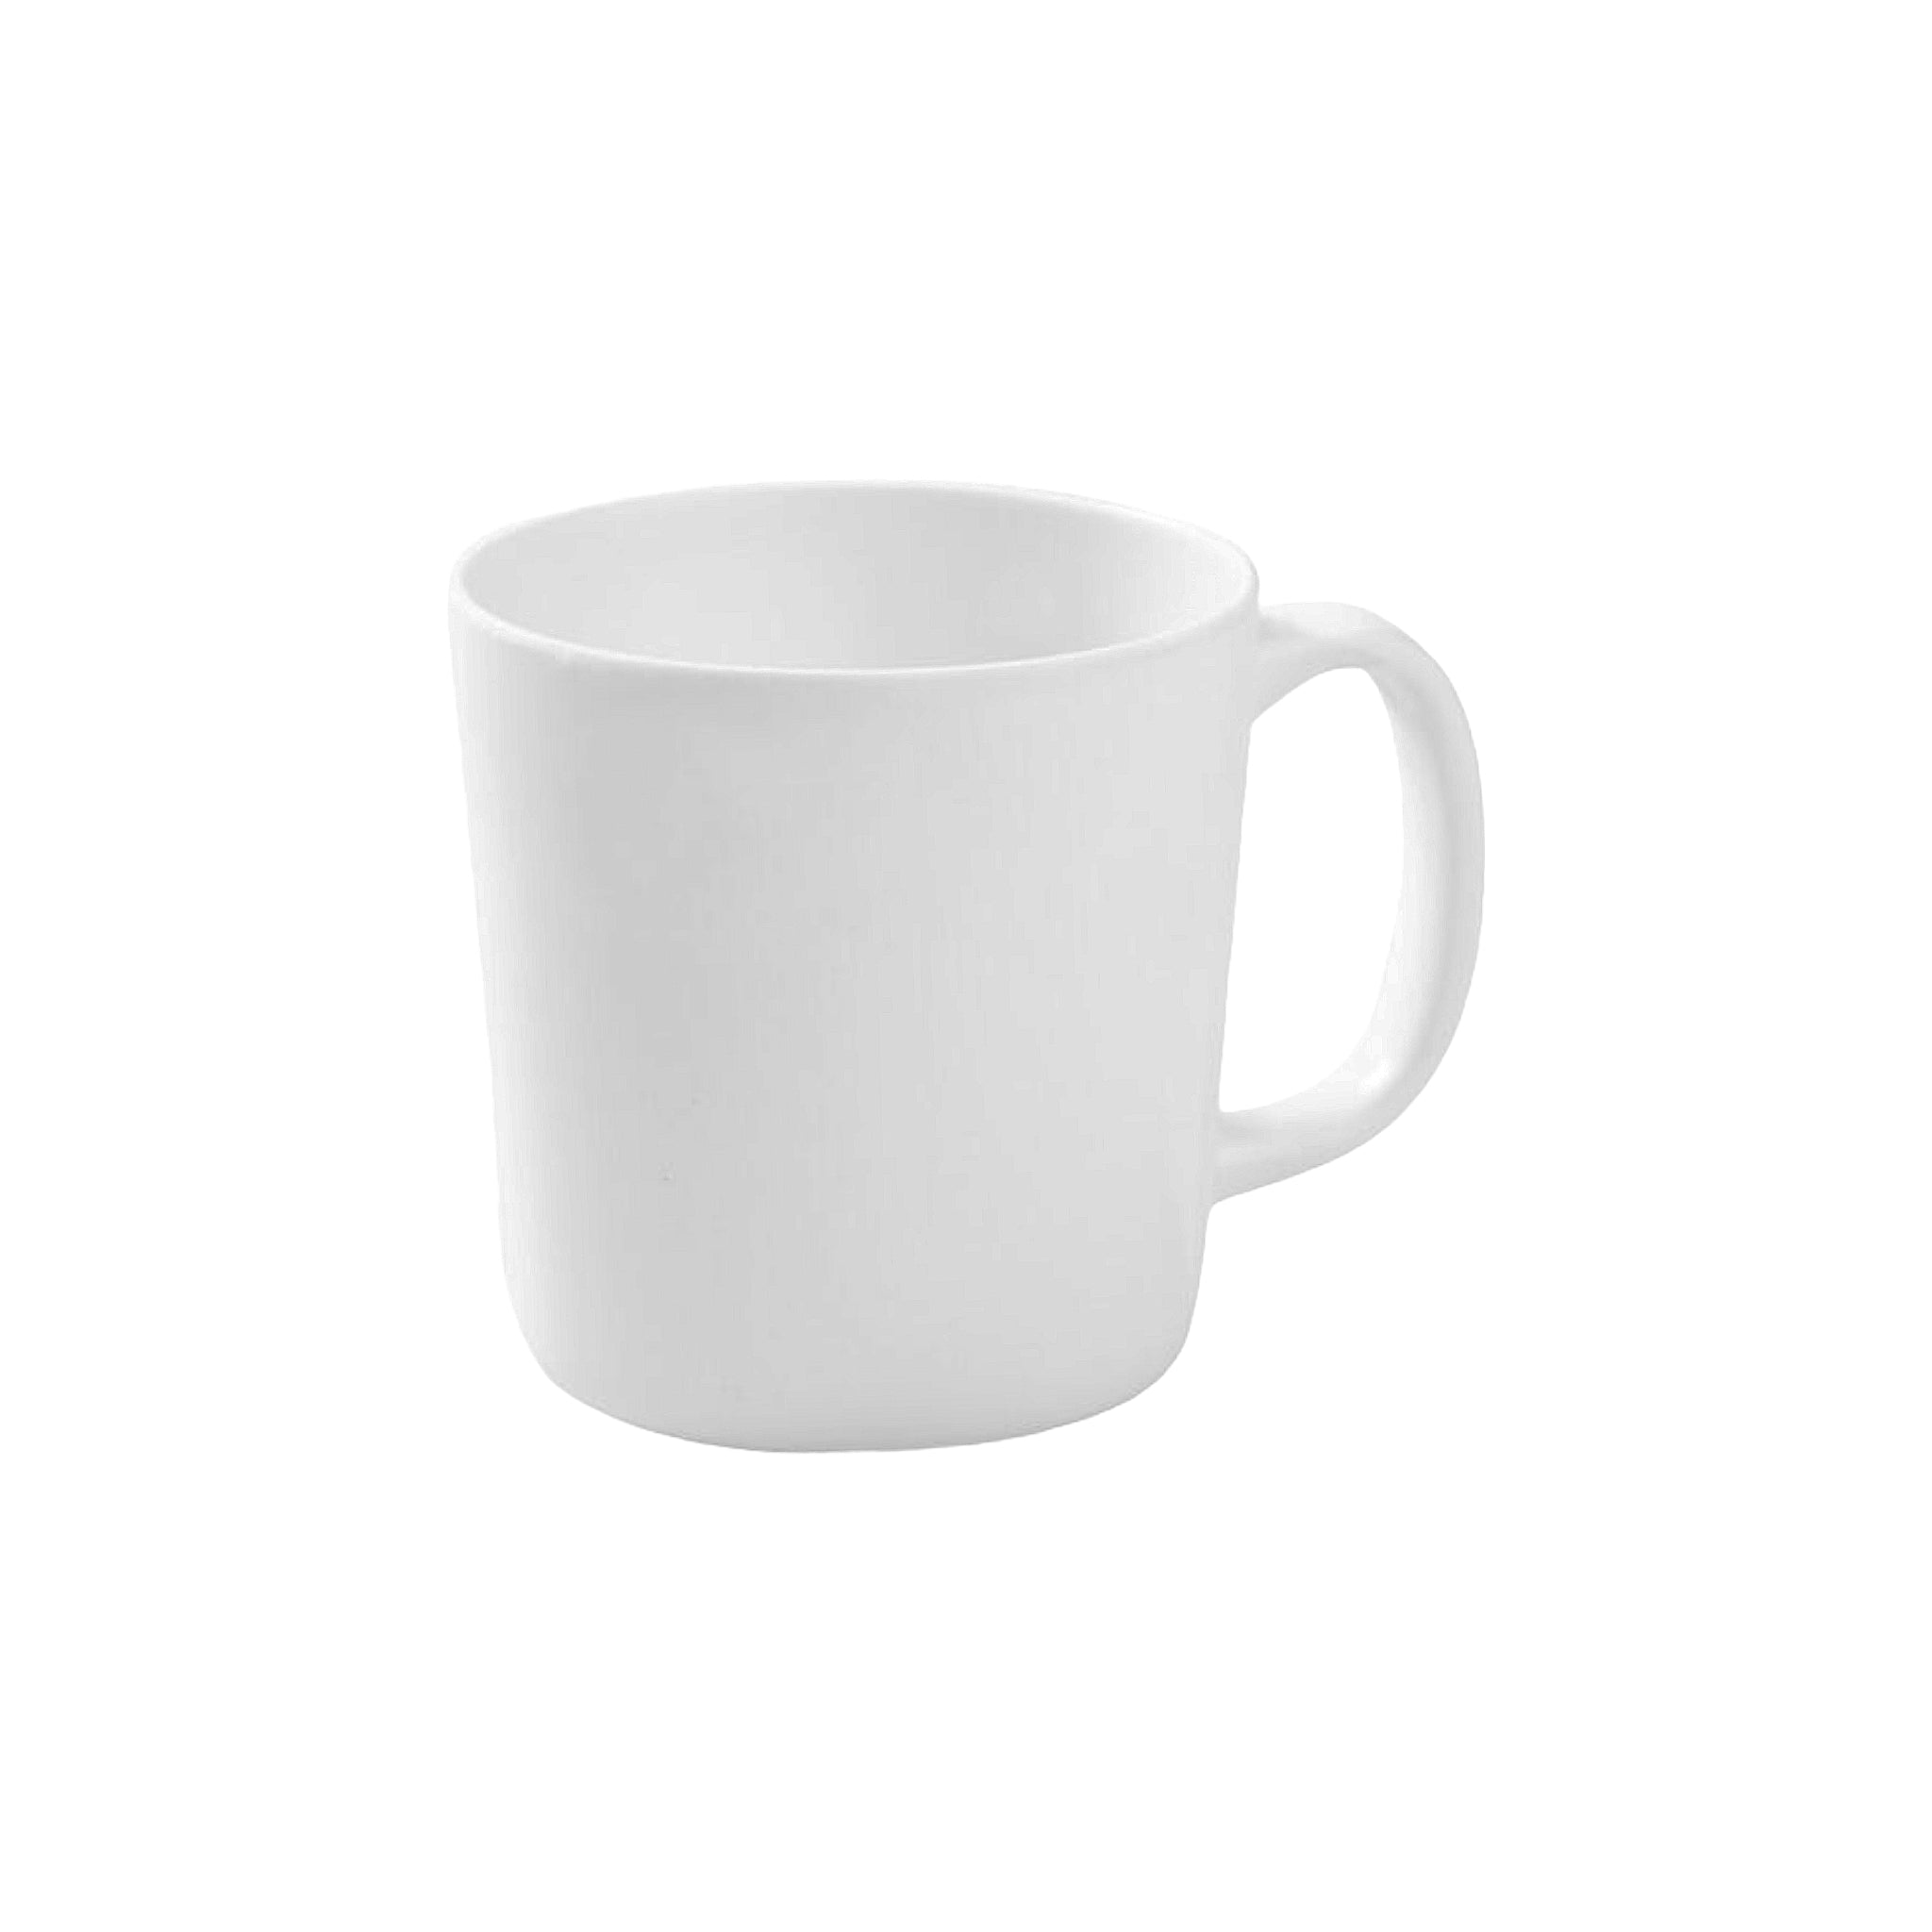 Melamine Mug 7.5x6.5cm White with handle